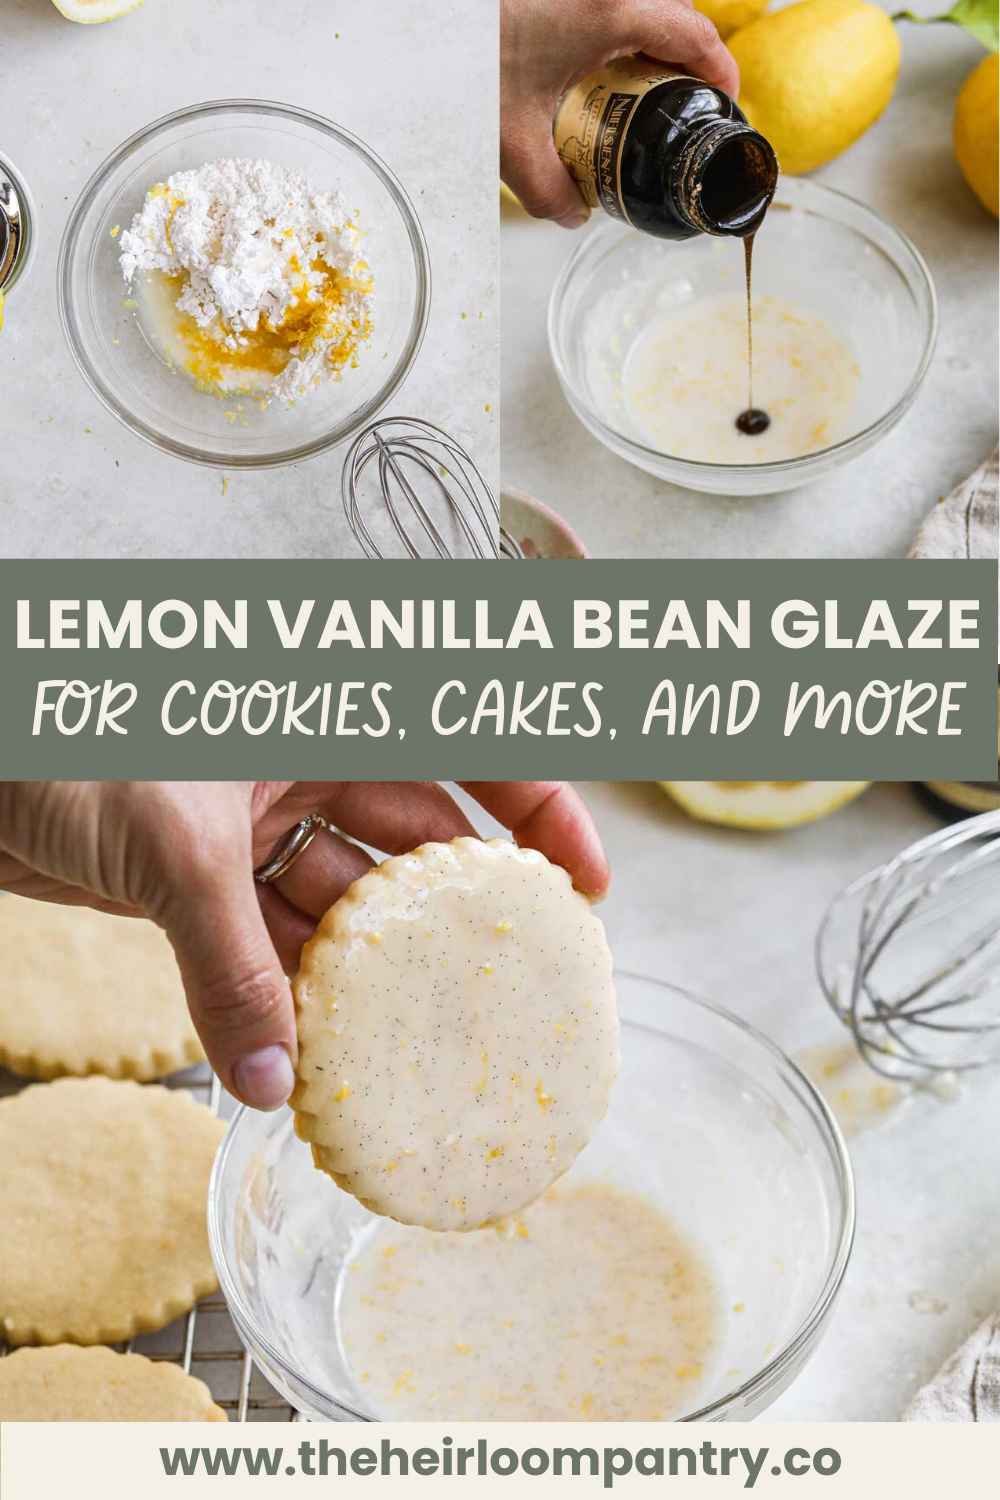 Lemon vanilla bean glaze Pinterest pin.